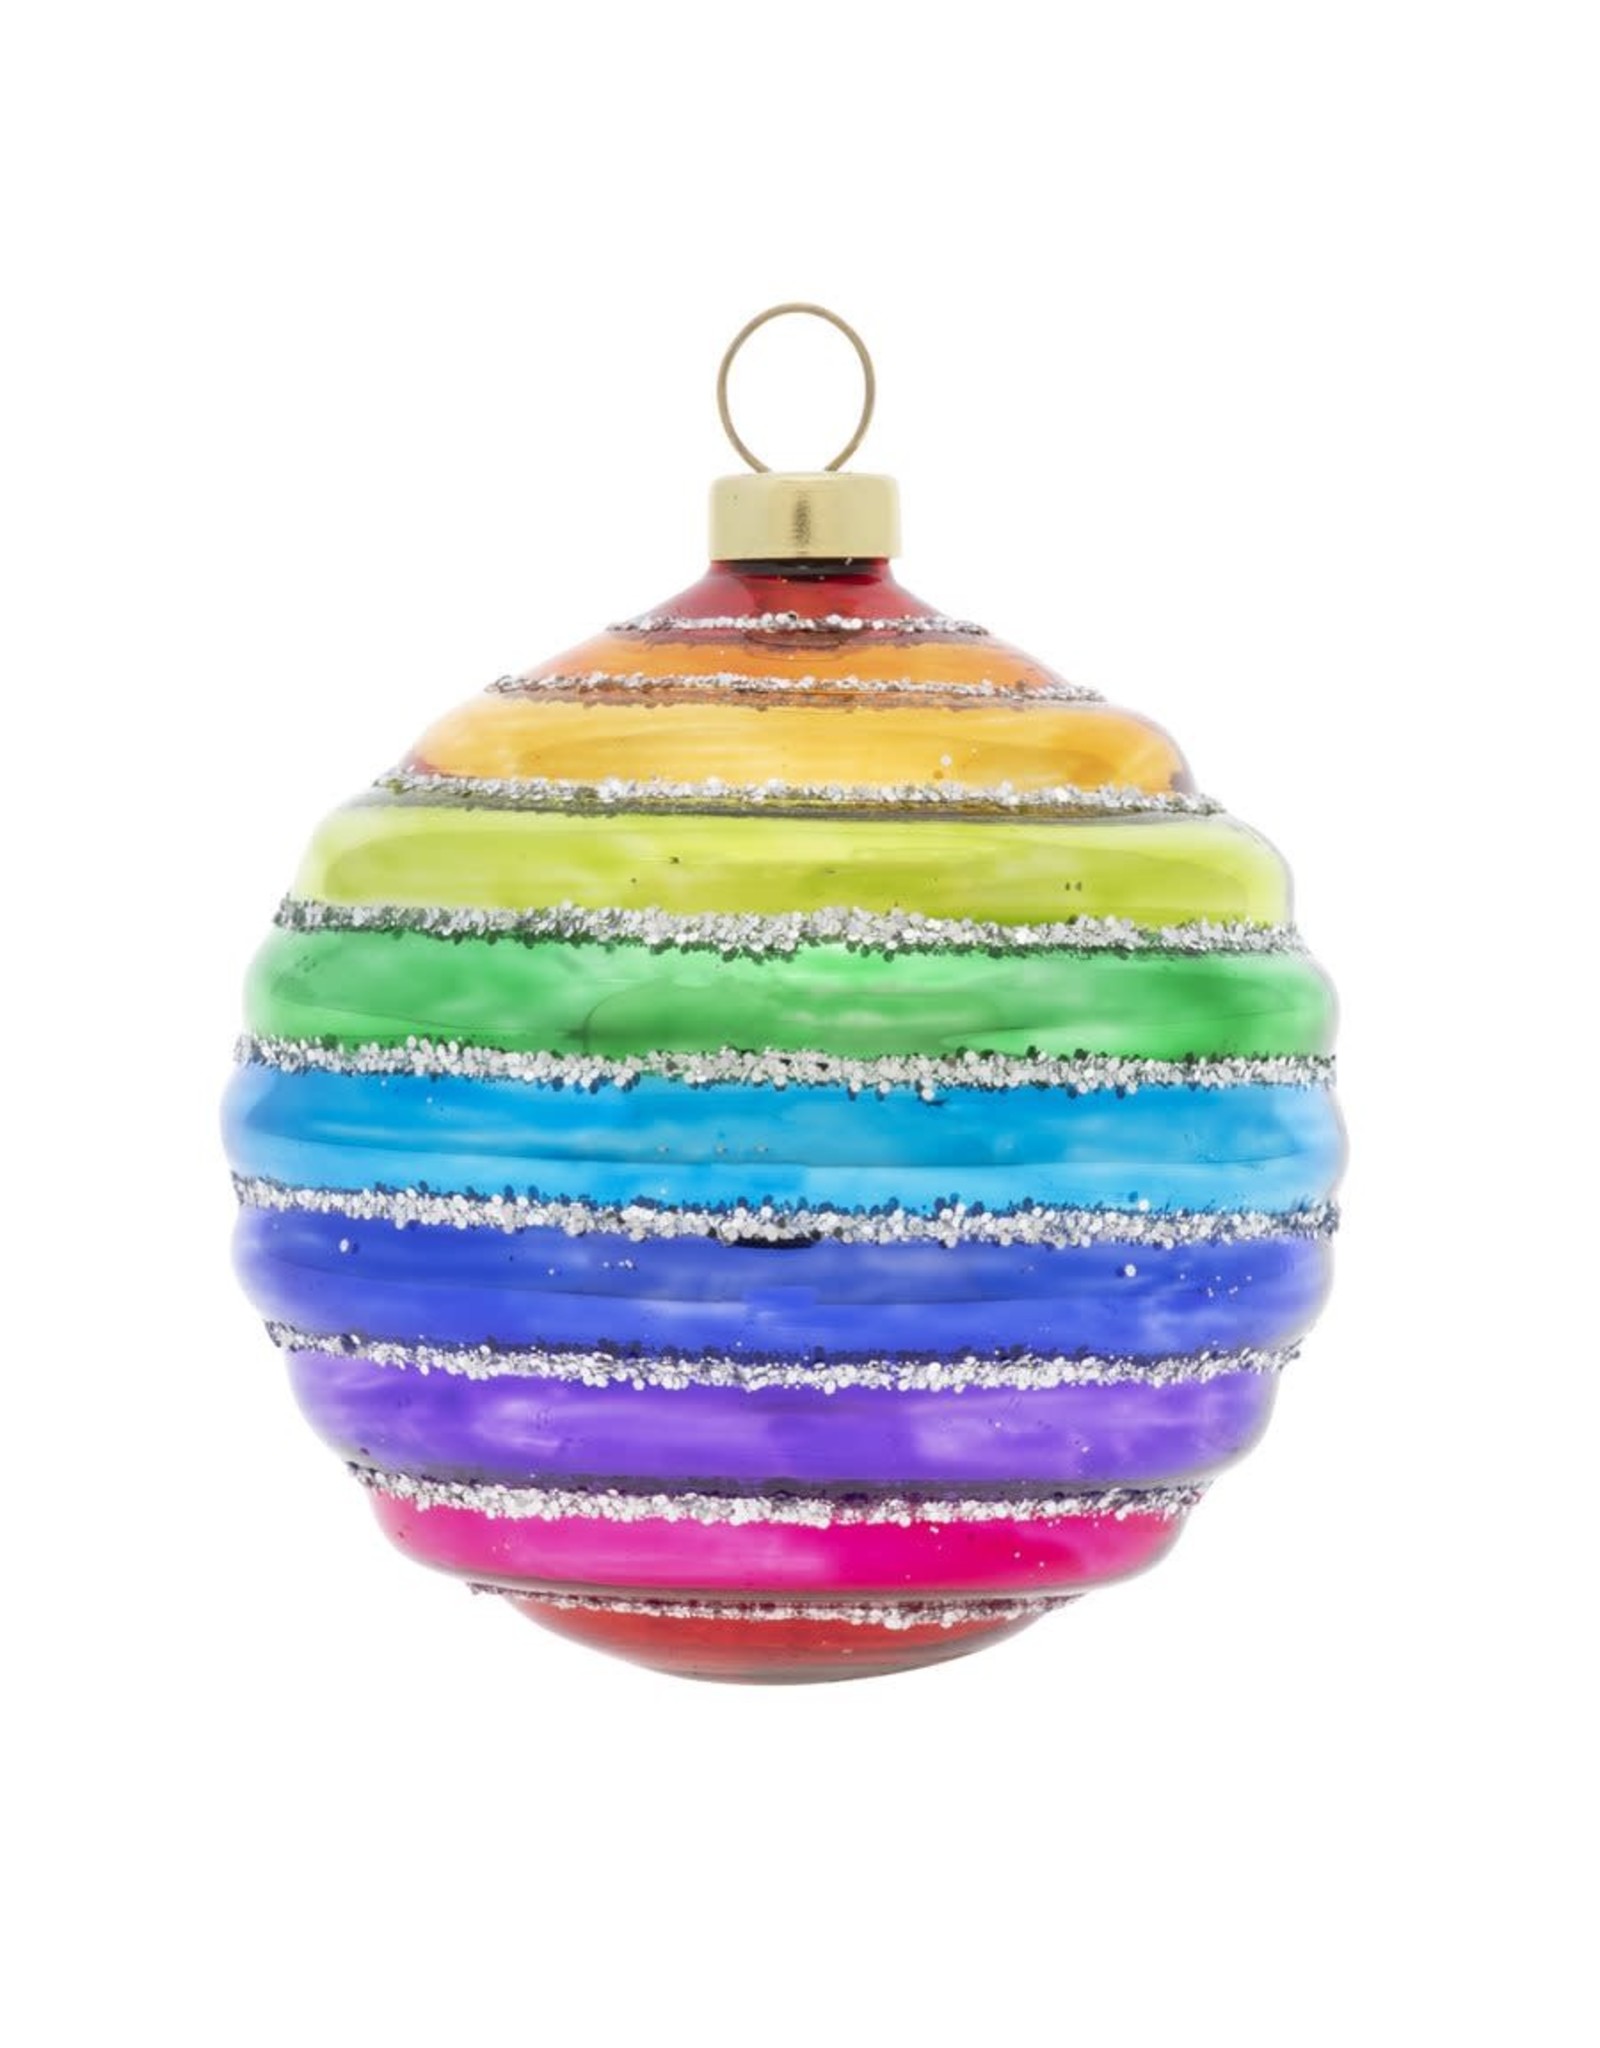 kat + annie Striped Rainbow Molded Round Christmas Ornament